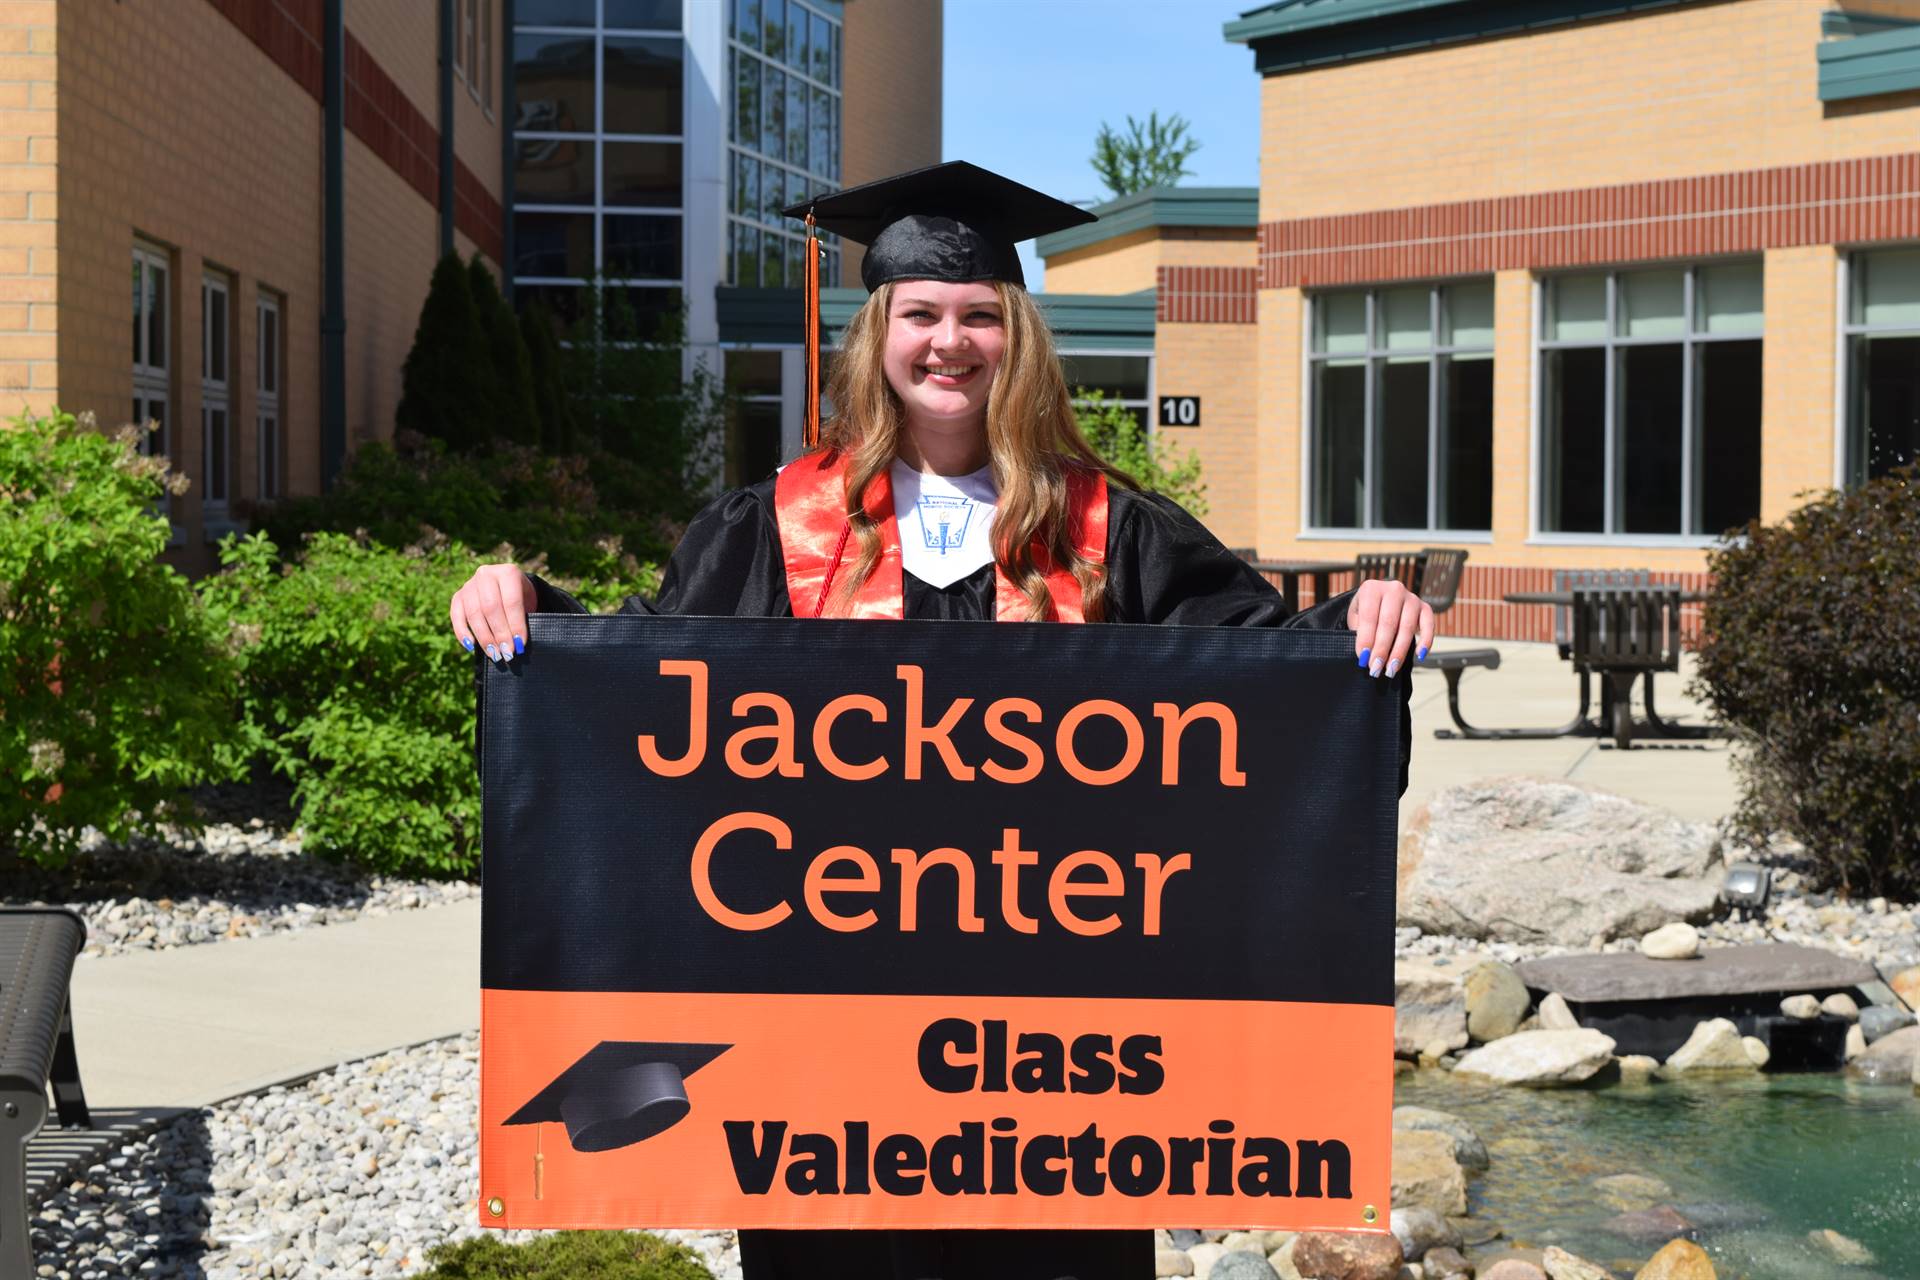 Jackson Center Valedictorian